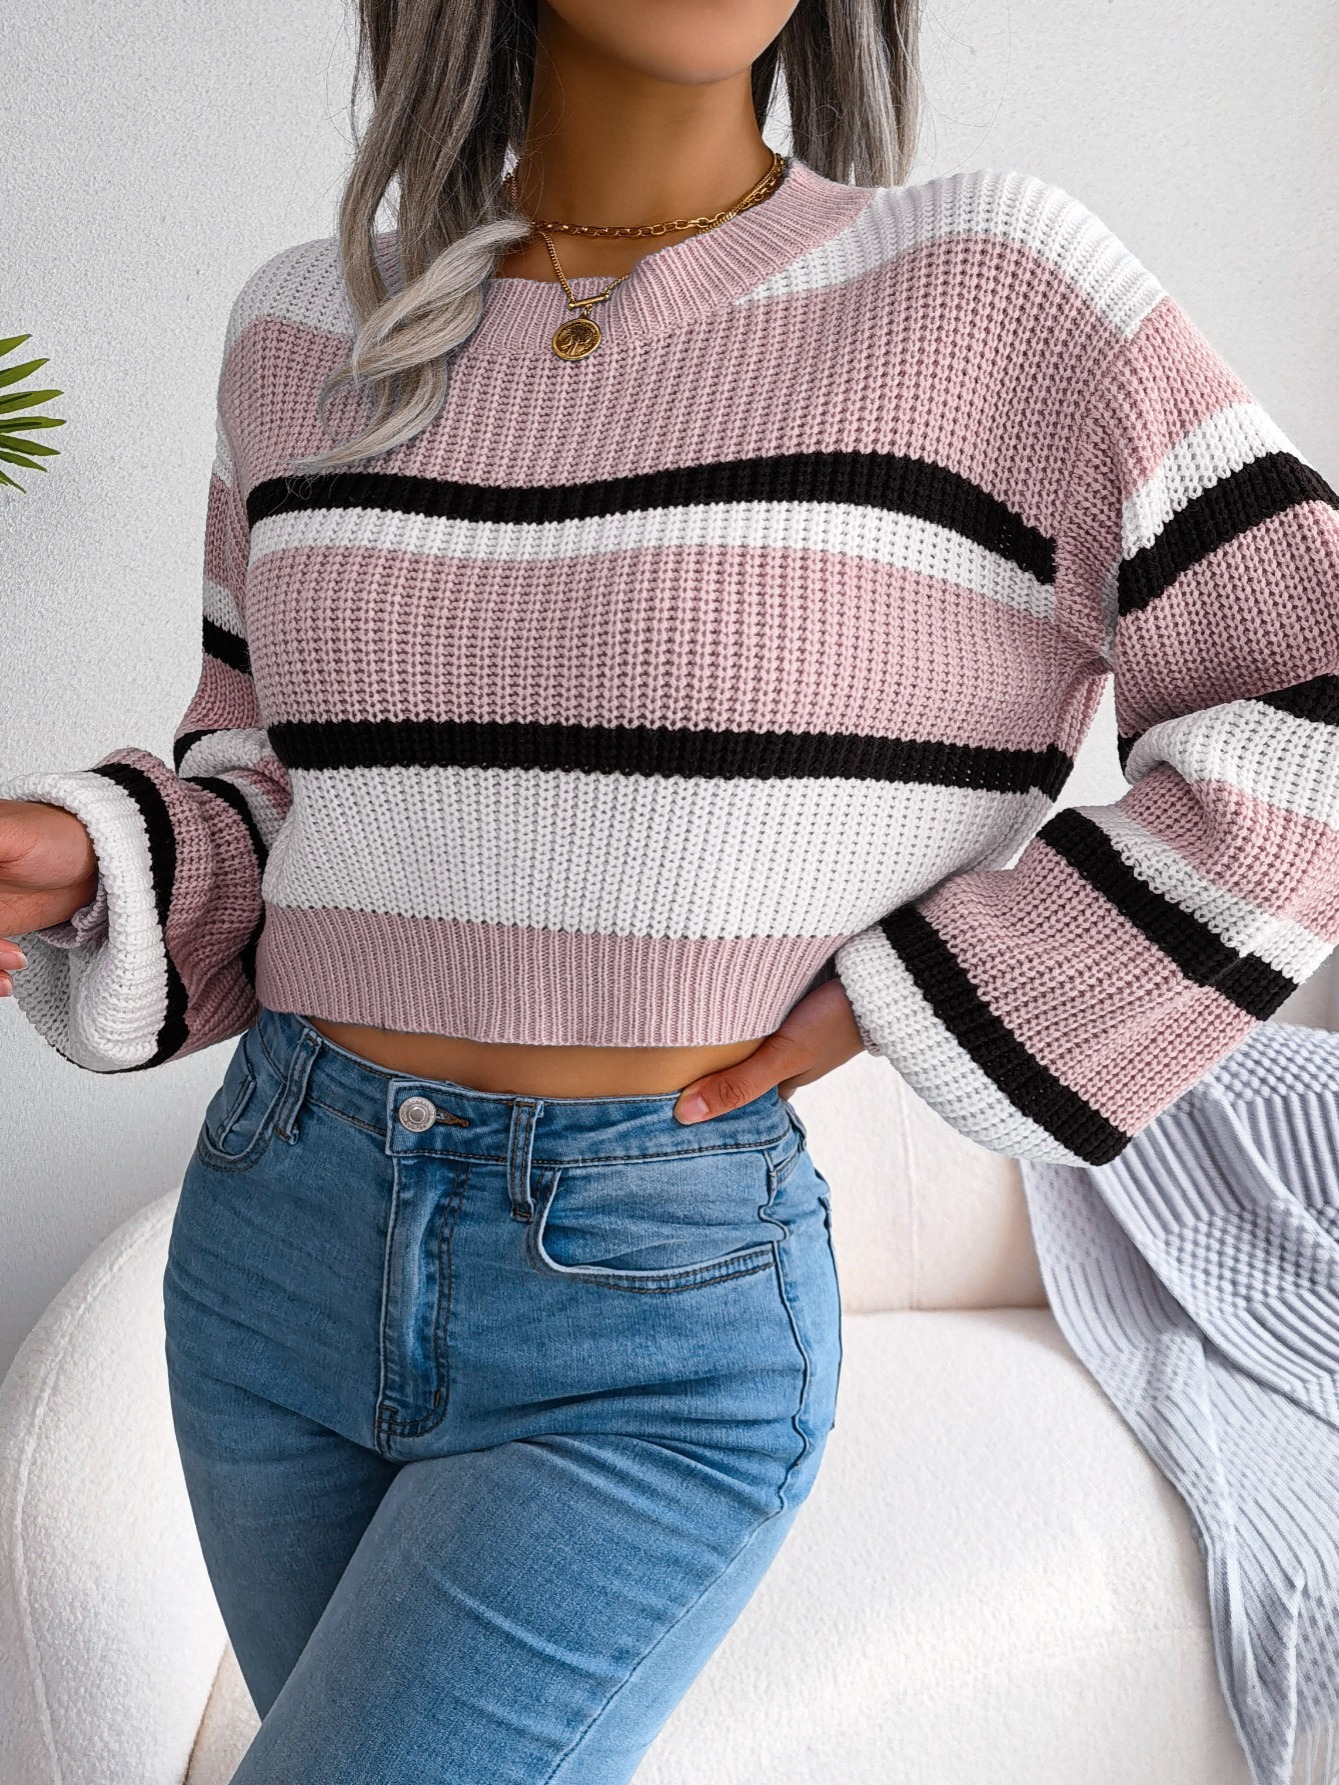 Three toned Color Block Crop Sweater Loose fit Rib knit Crew